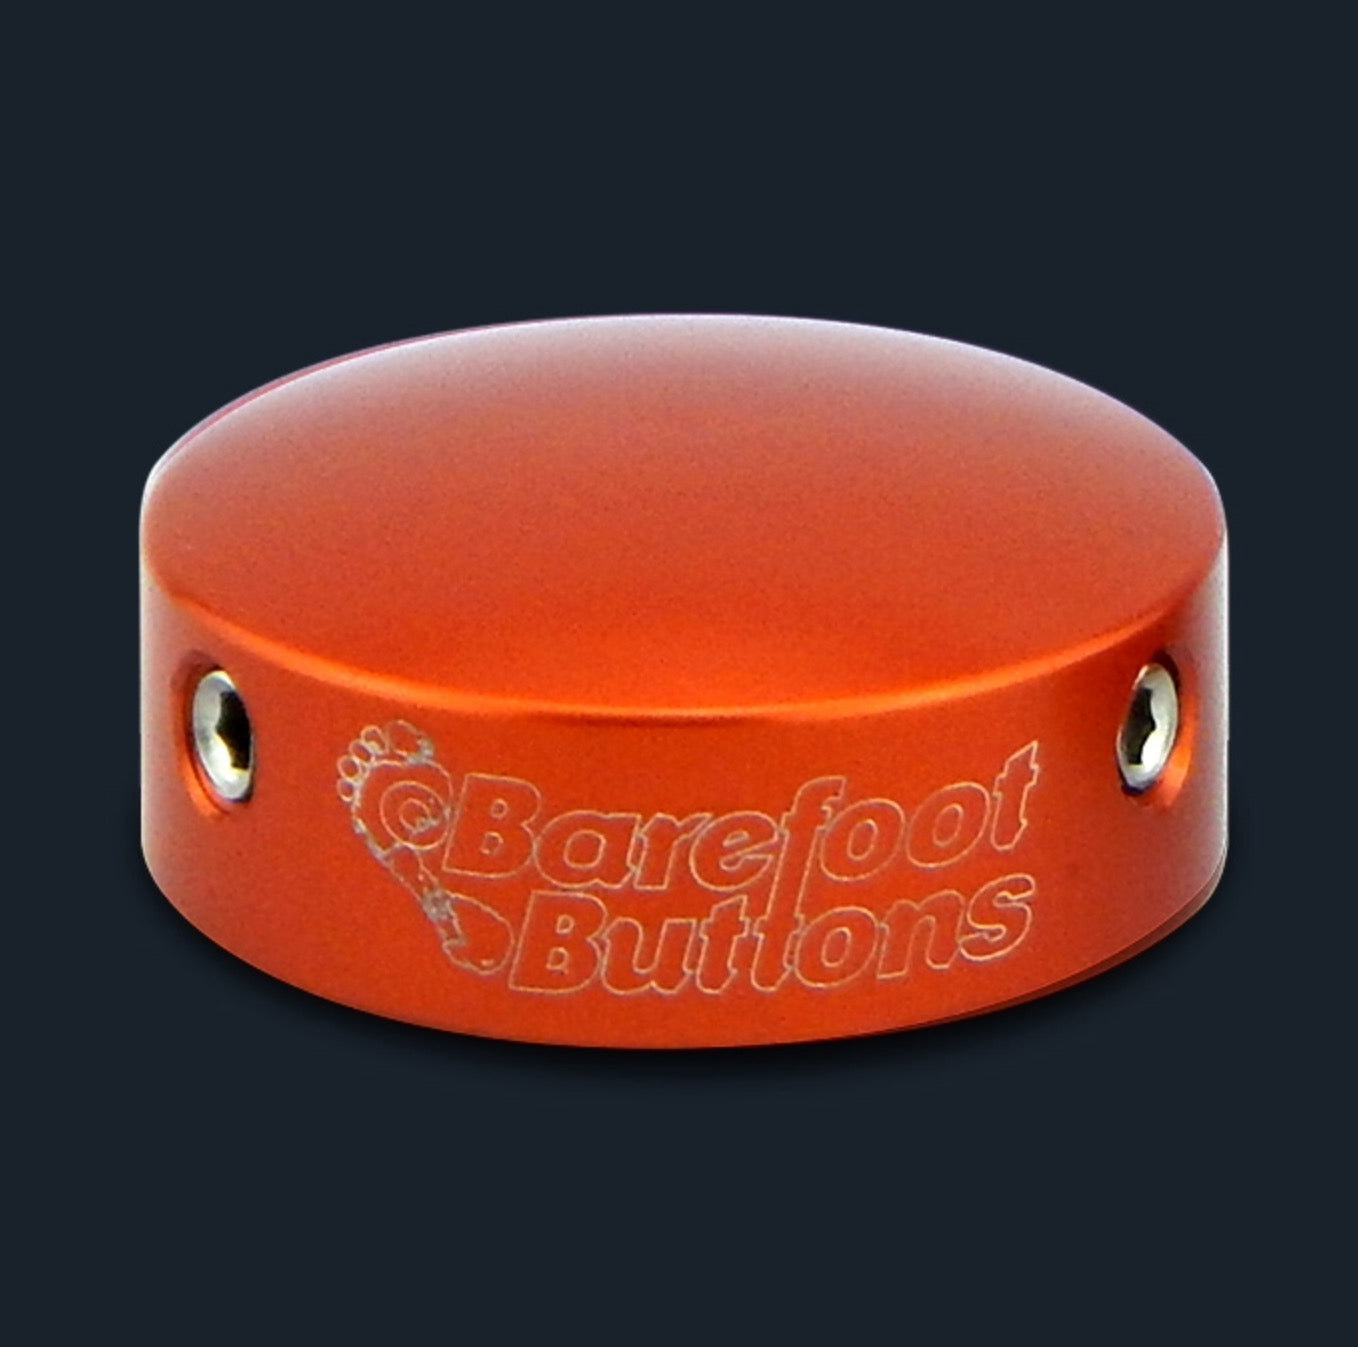 Barefoot Buttons Version 1 (Orange)